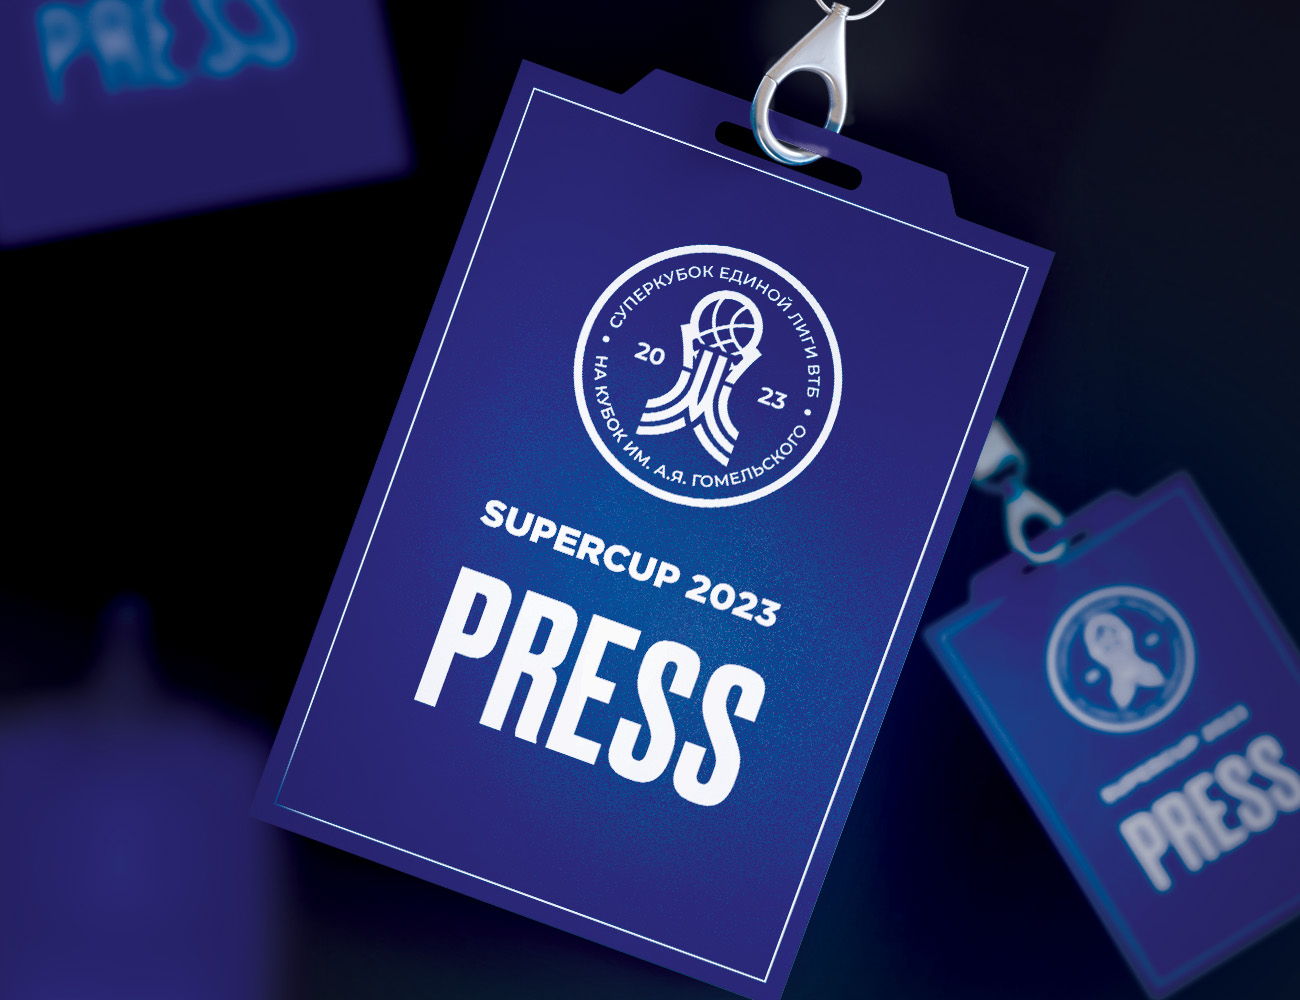 Вниманию СМИ! Открыта аккредитация на Суперкубок-2023